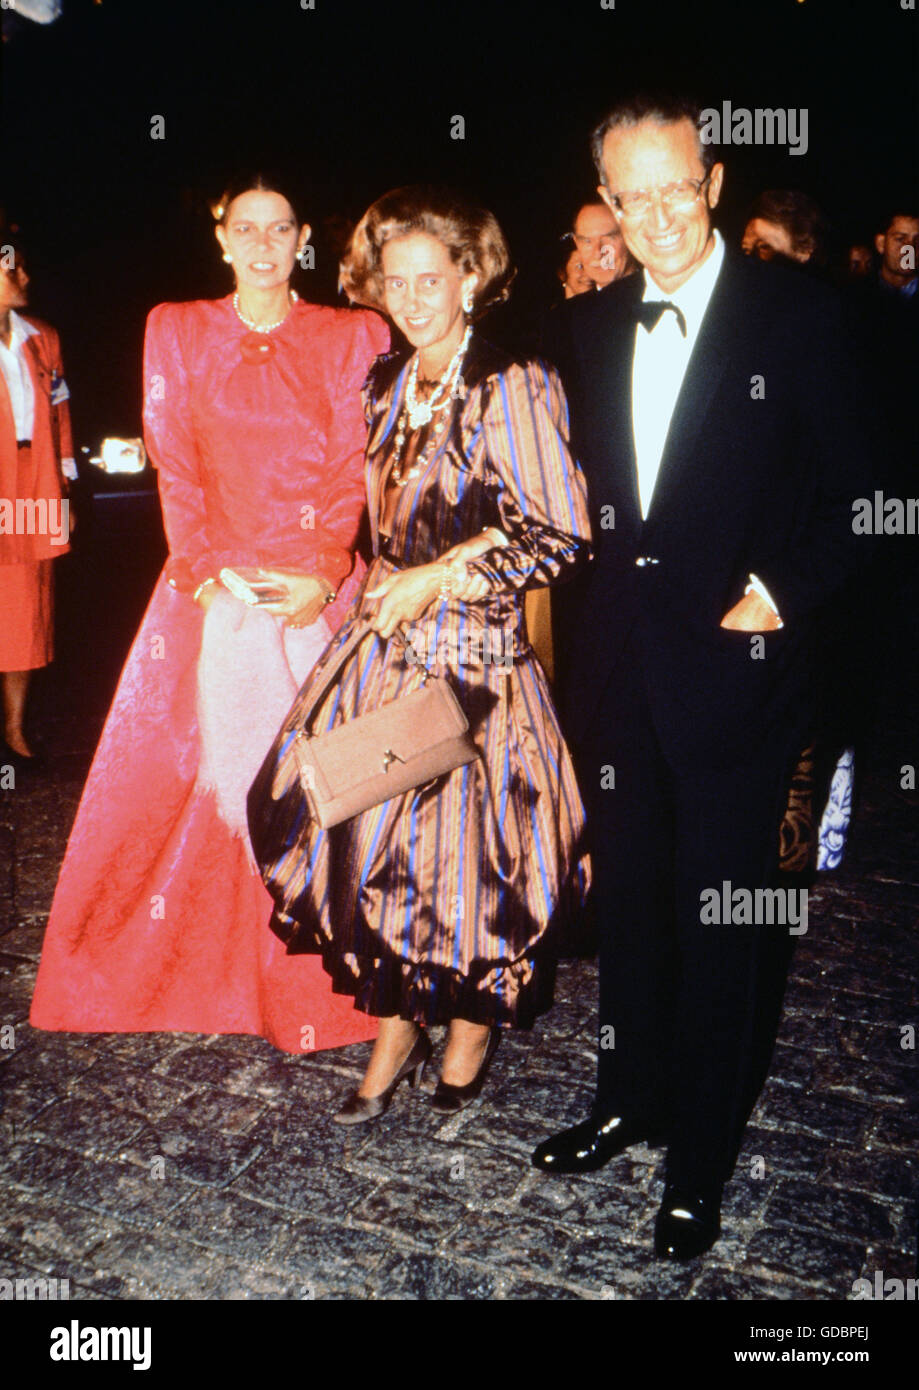 Fabiola  11.6.1928 - 5.12.2014, Queen of Belgium, full length, with Princess Irene of Greece and King Baudouin I of Belgium, 1990s, Stock Photo